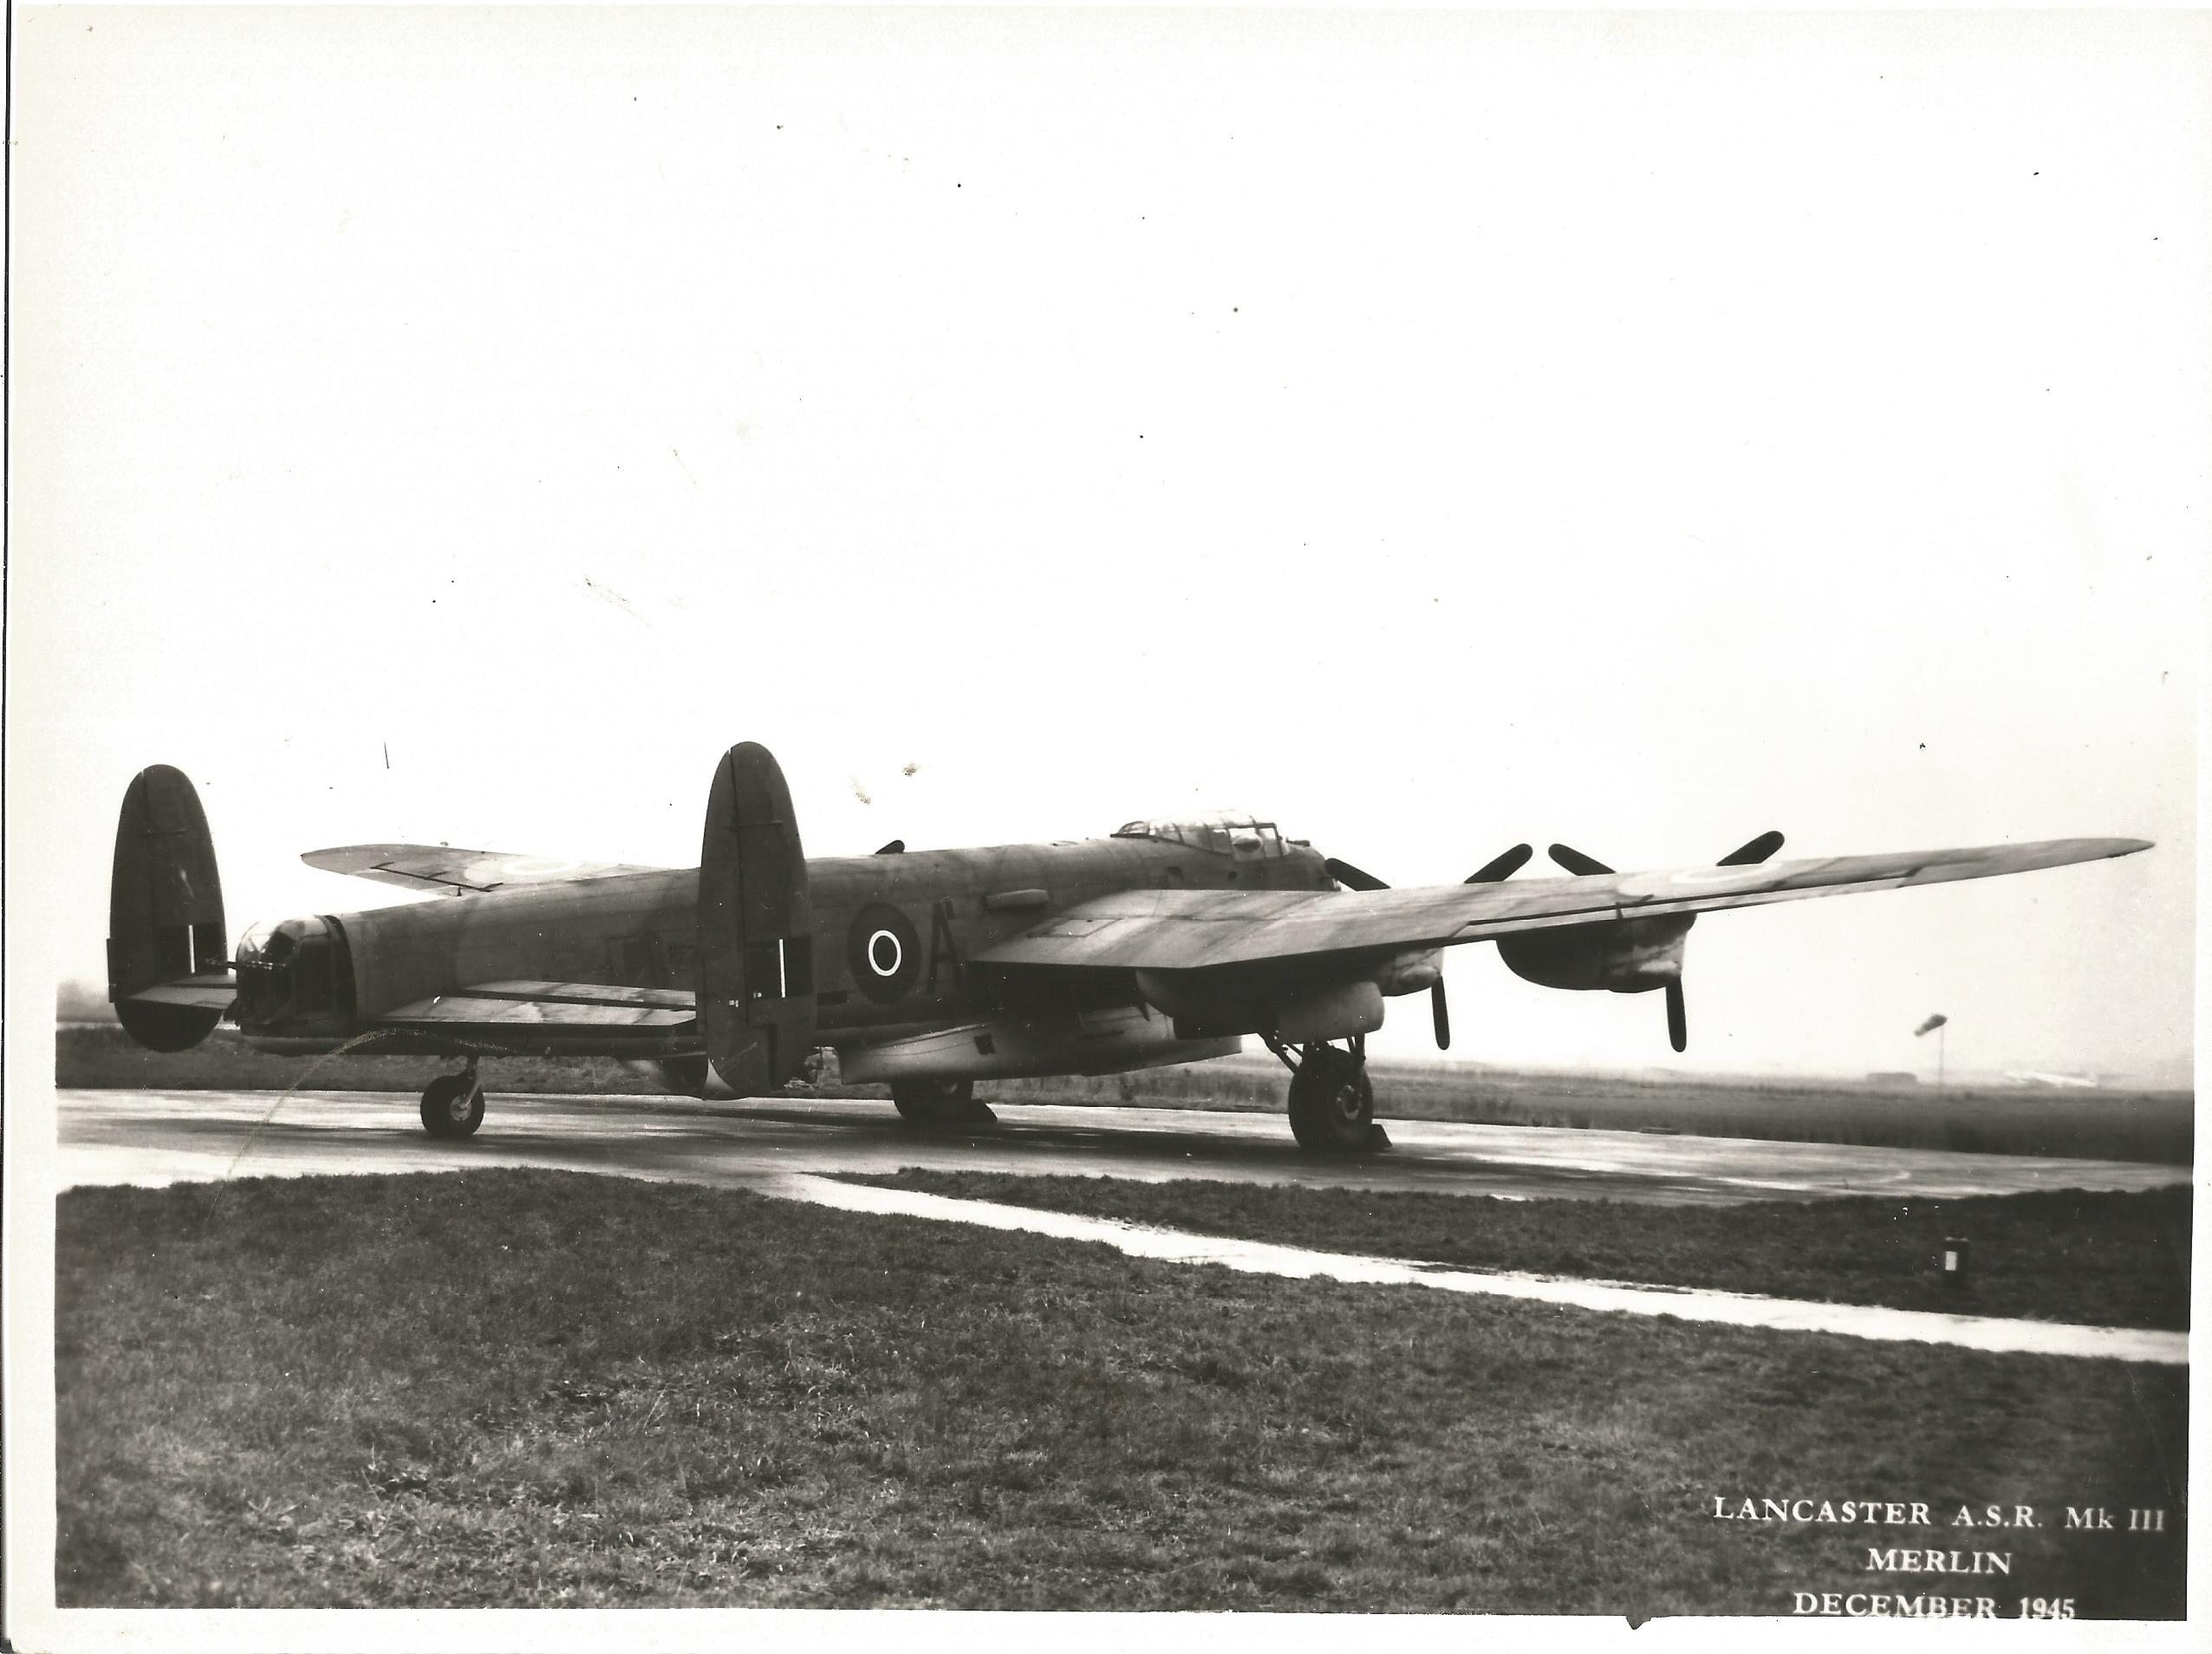 RAF Lancaster A. S. R MK III Merlin bomber 6x9 b/w vintage photo pictured December 1945. Good